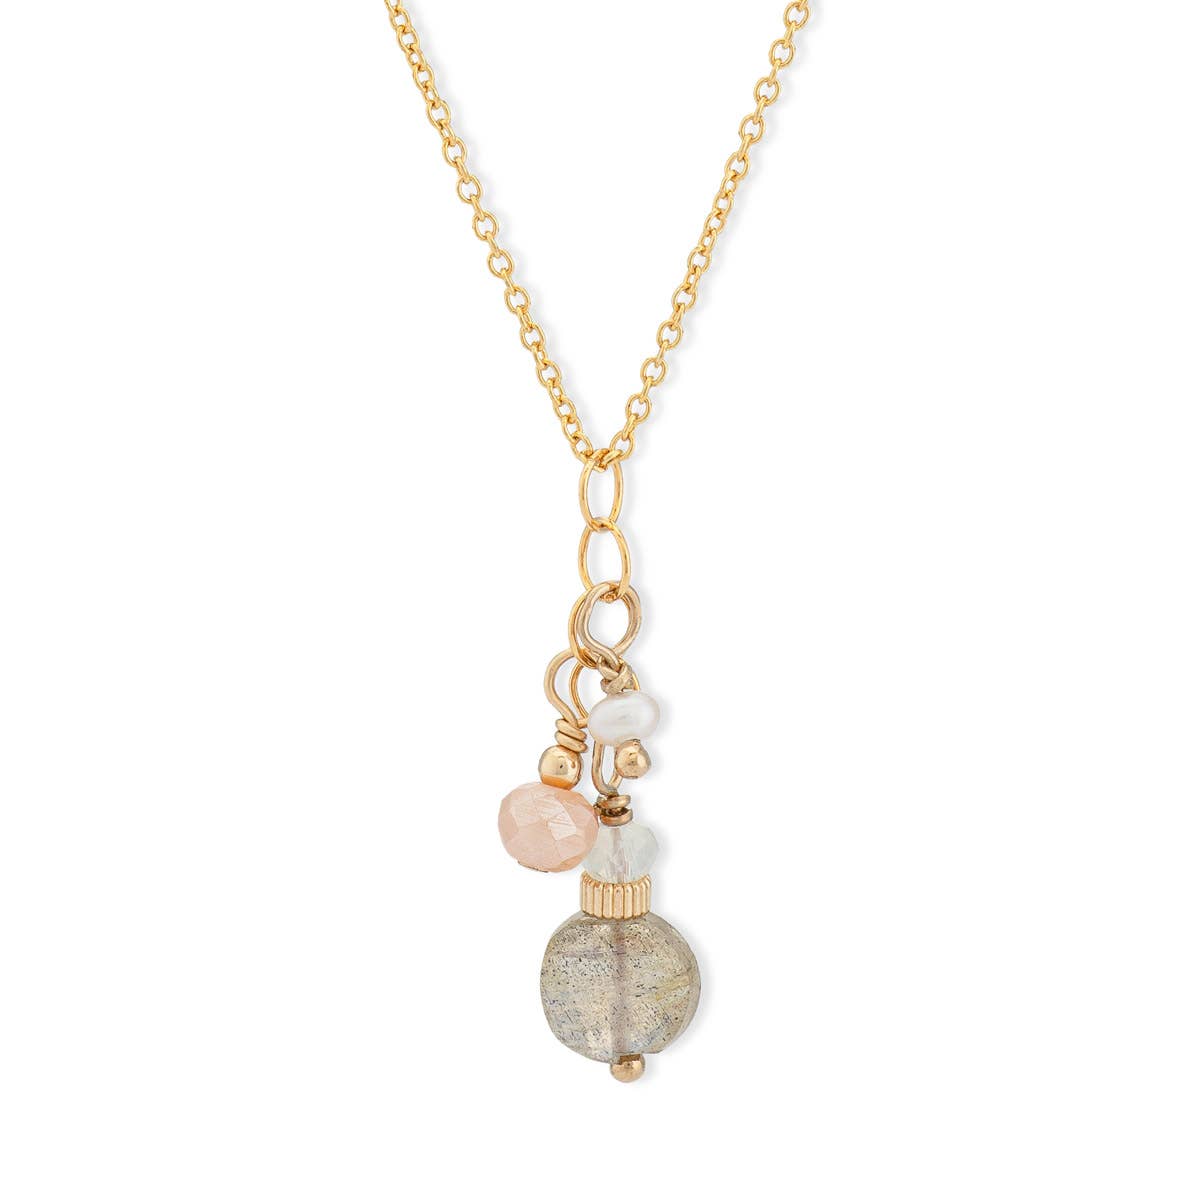 Chloe Labradorite Drop Handmade Necklace Gold Filled: 16" / Gold filled